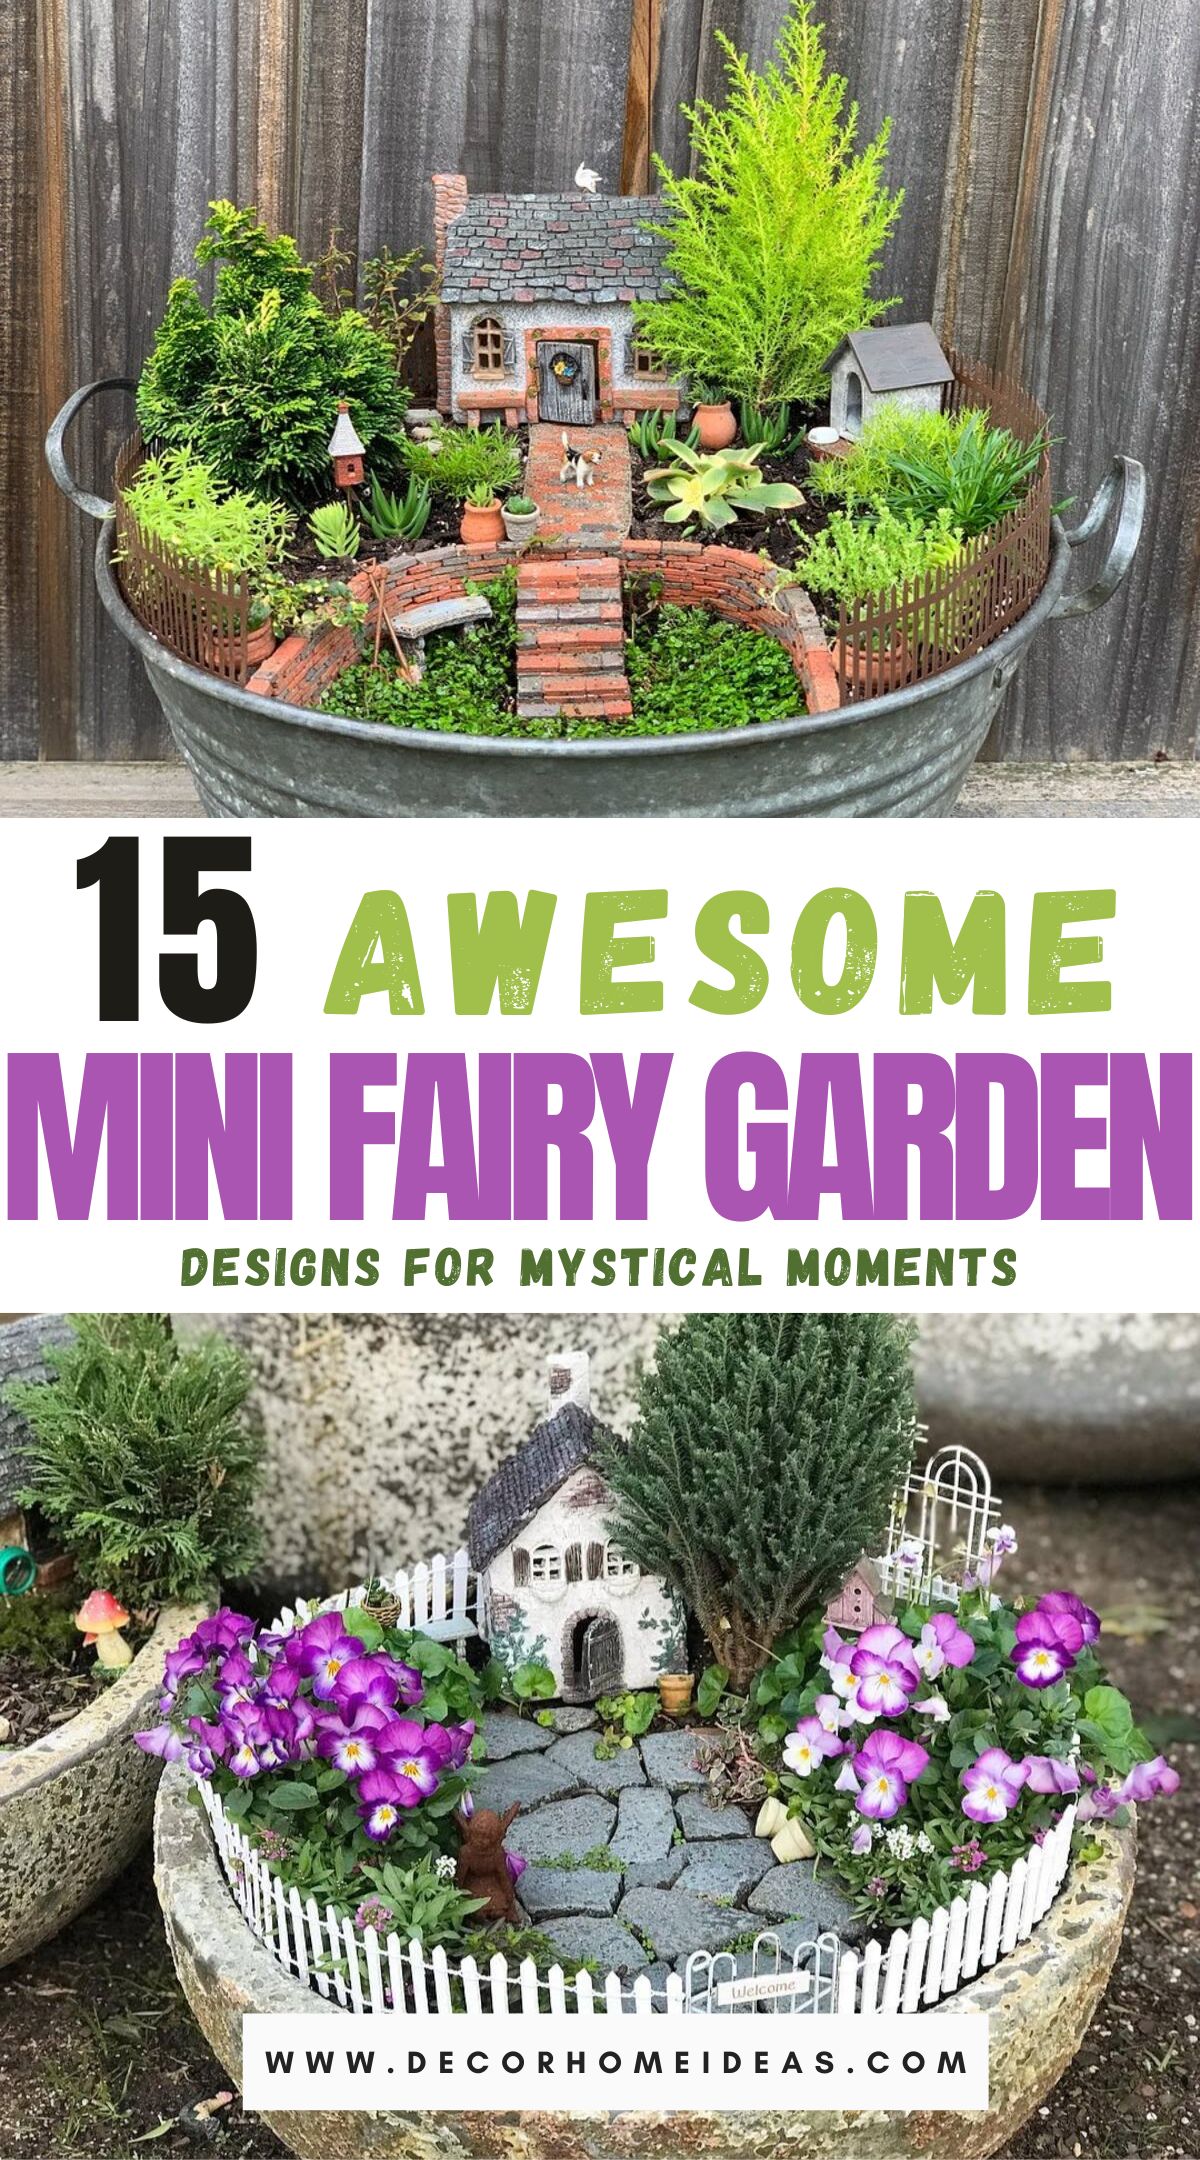 Best Mini Fairy Garden Ideas and Designs